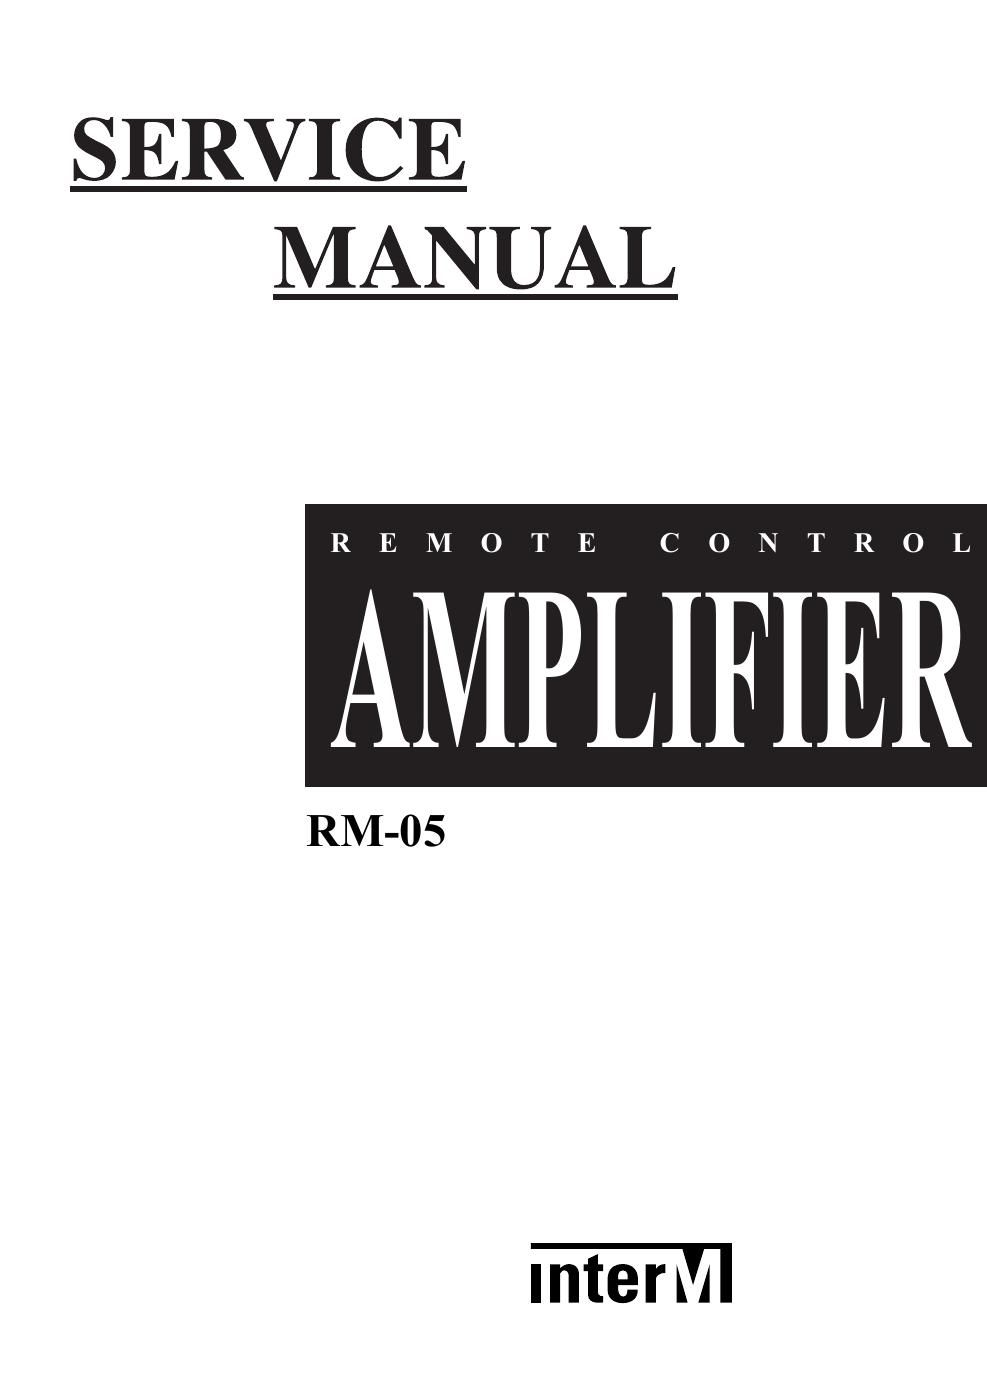 interm rm 05 remote control amp